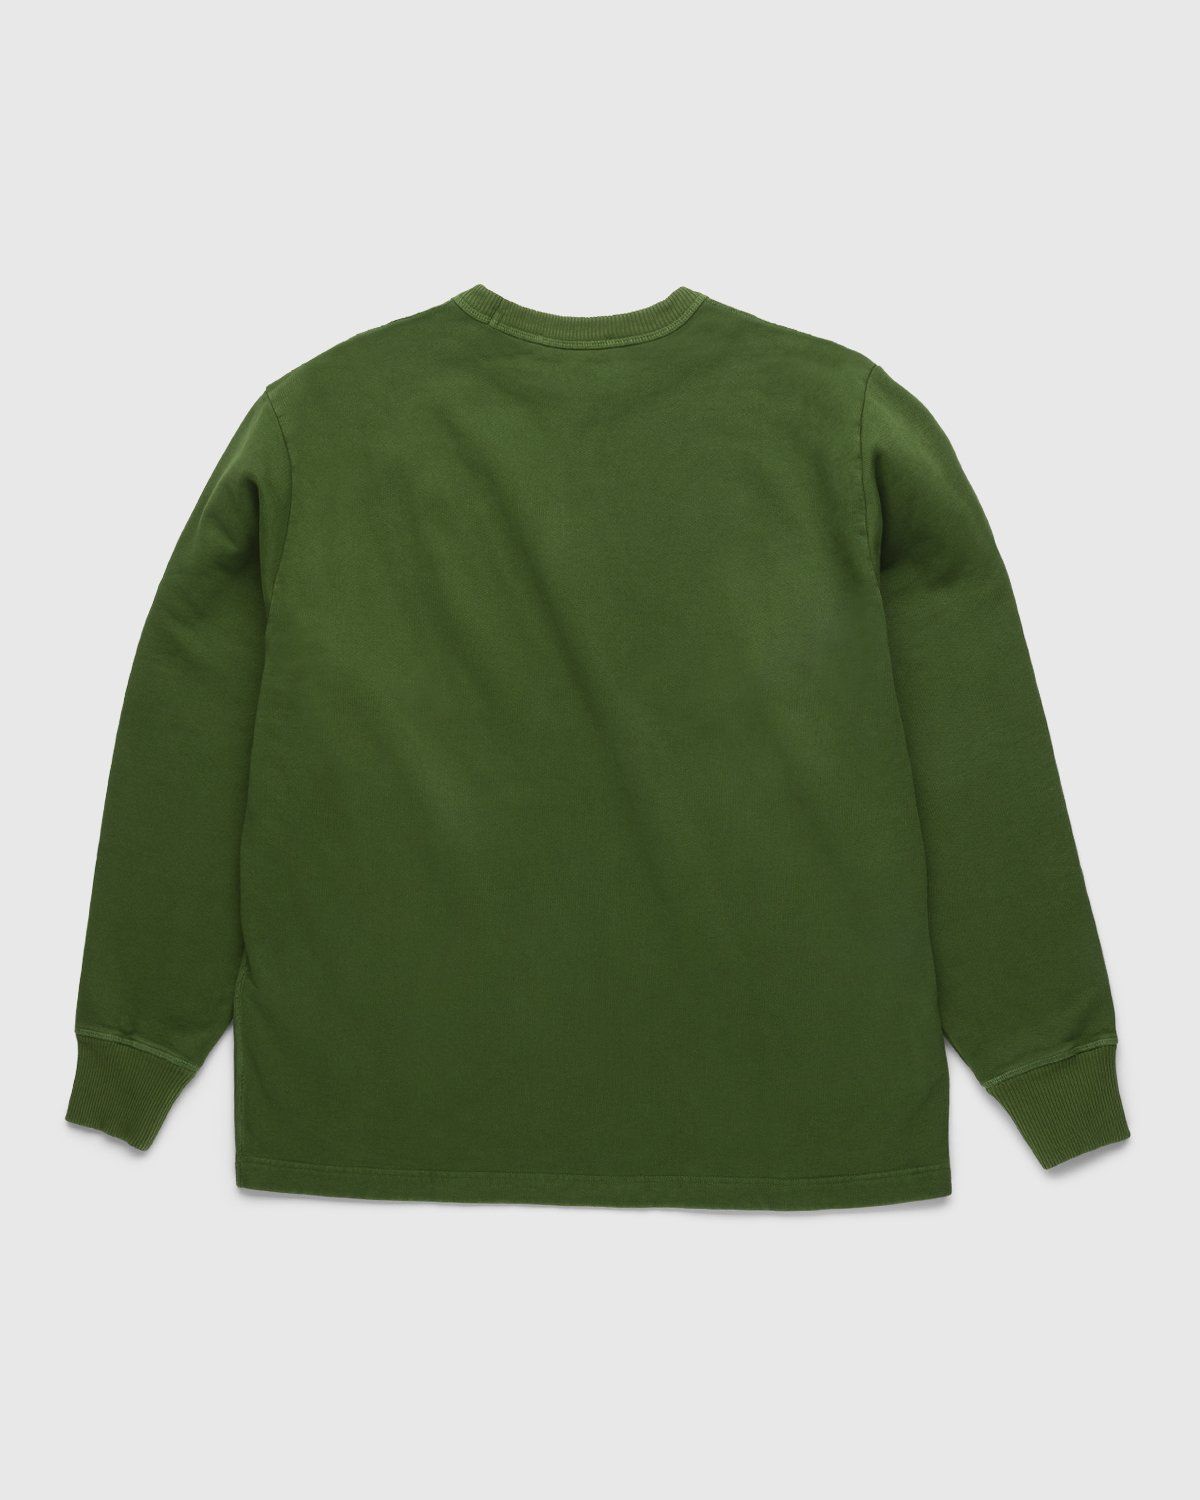 Acne Studios – Organic Cotton Crewneck Sweatshirt Bottle Green - Sweatshirts - Green - Image 2